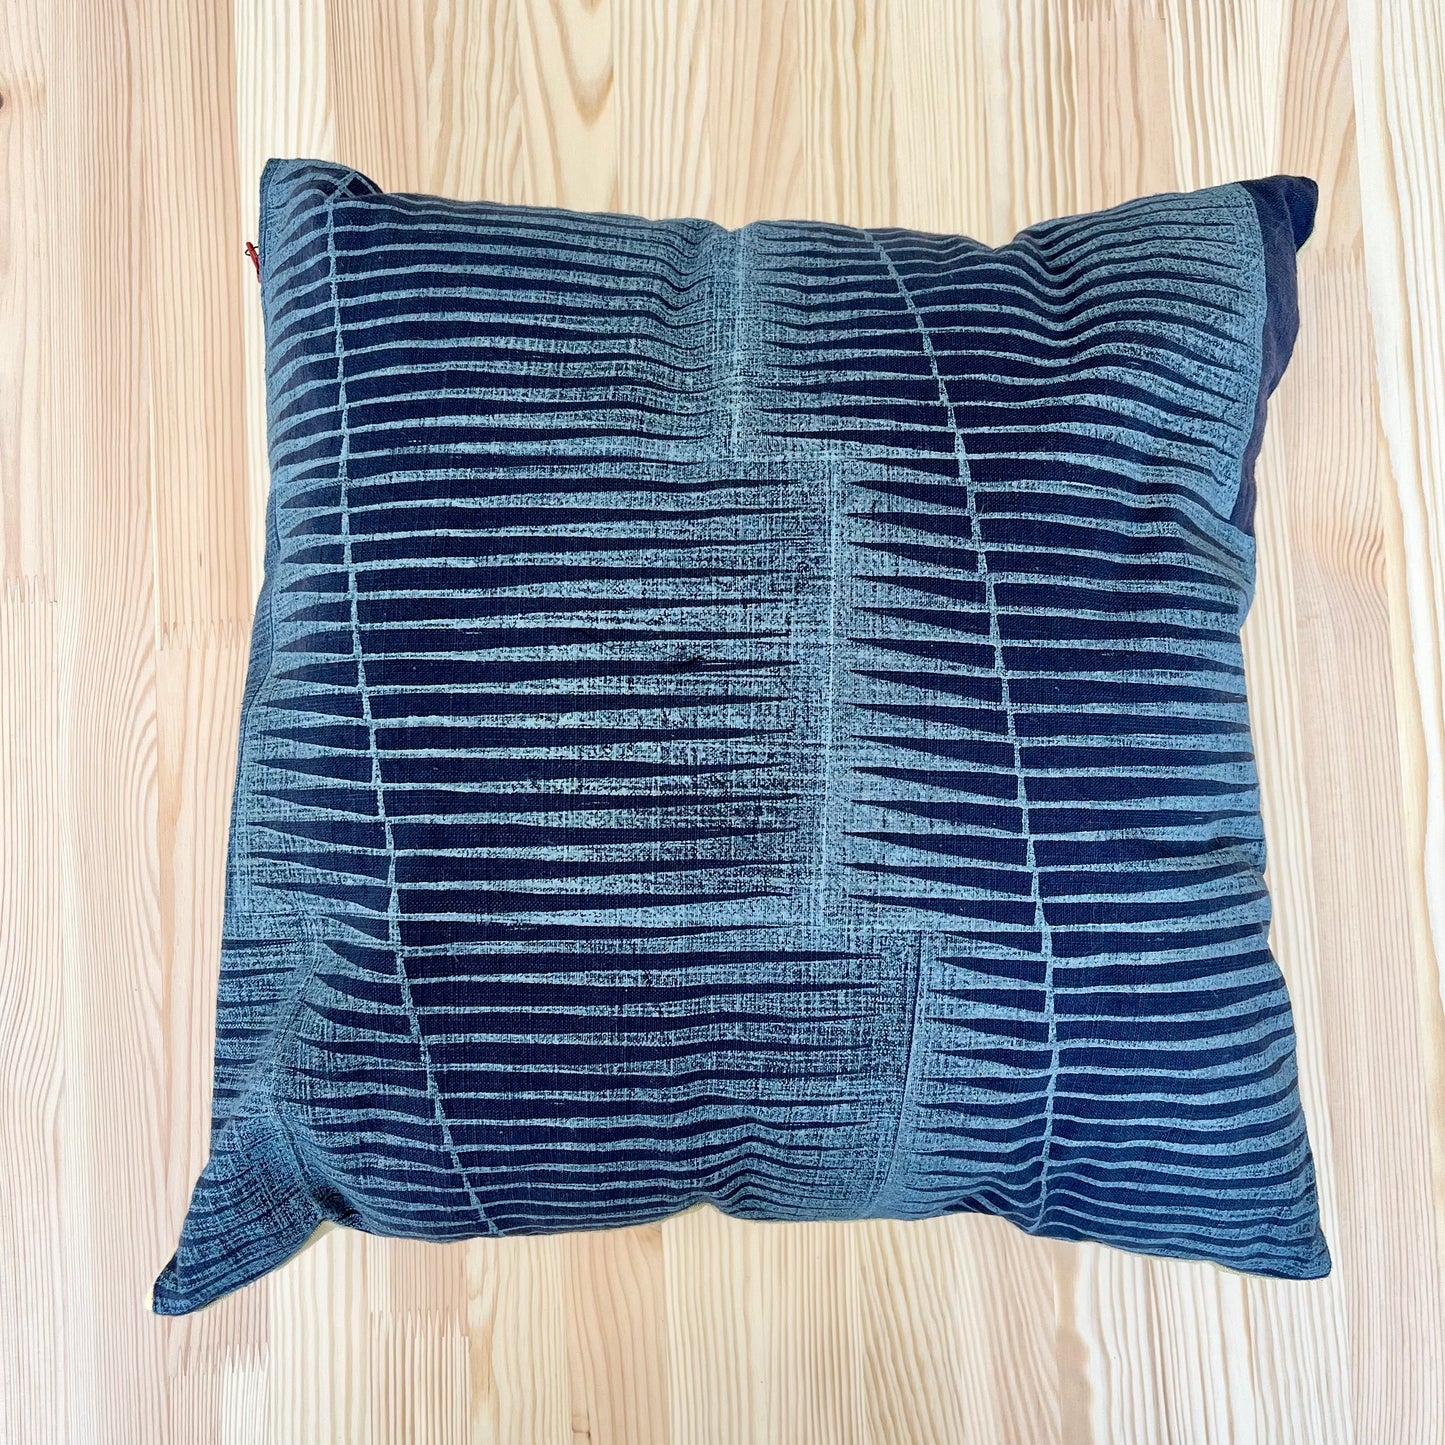 Hand-Printed Pillows